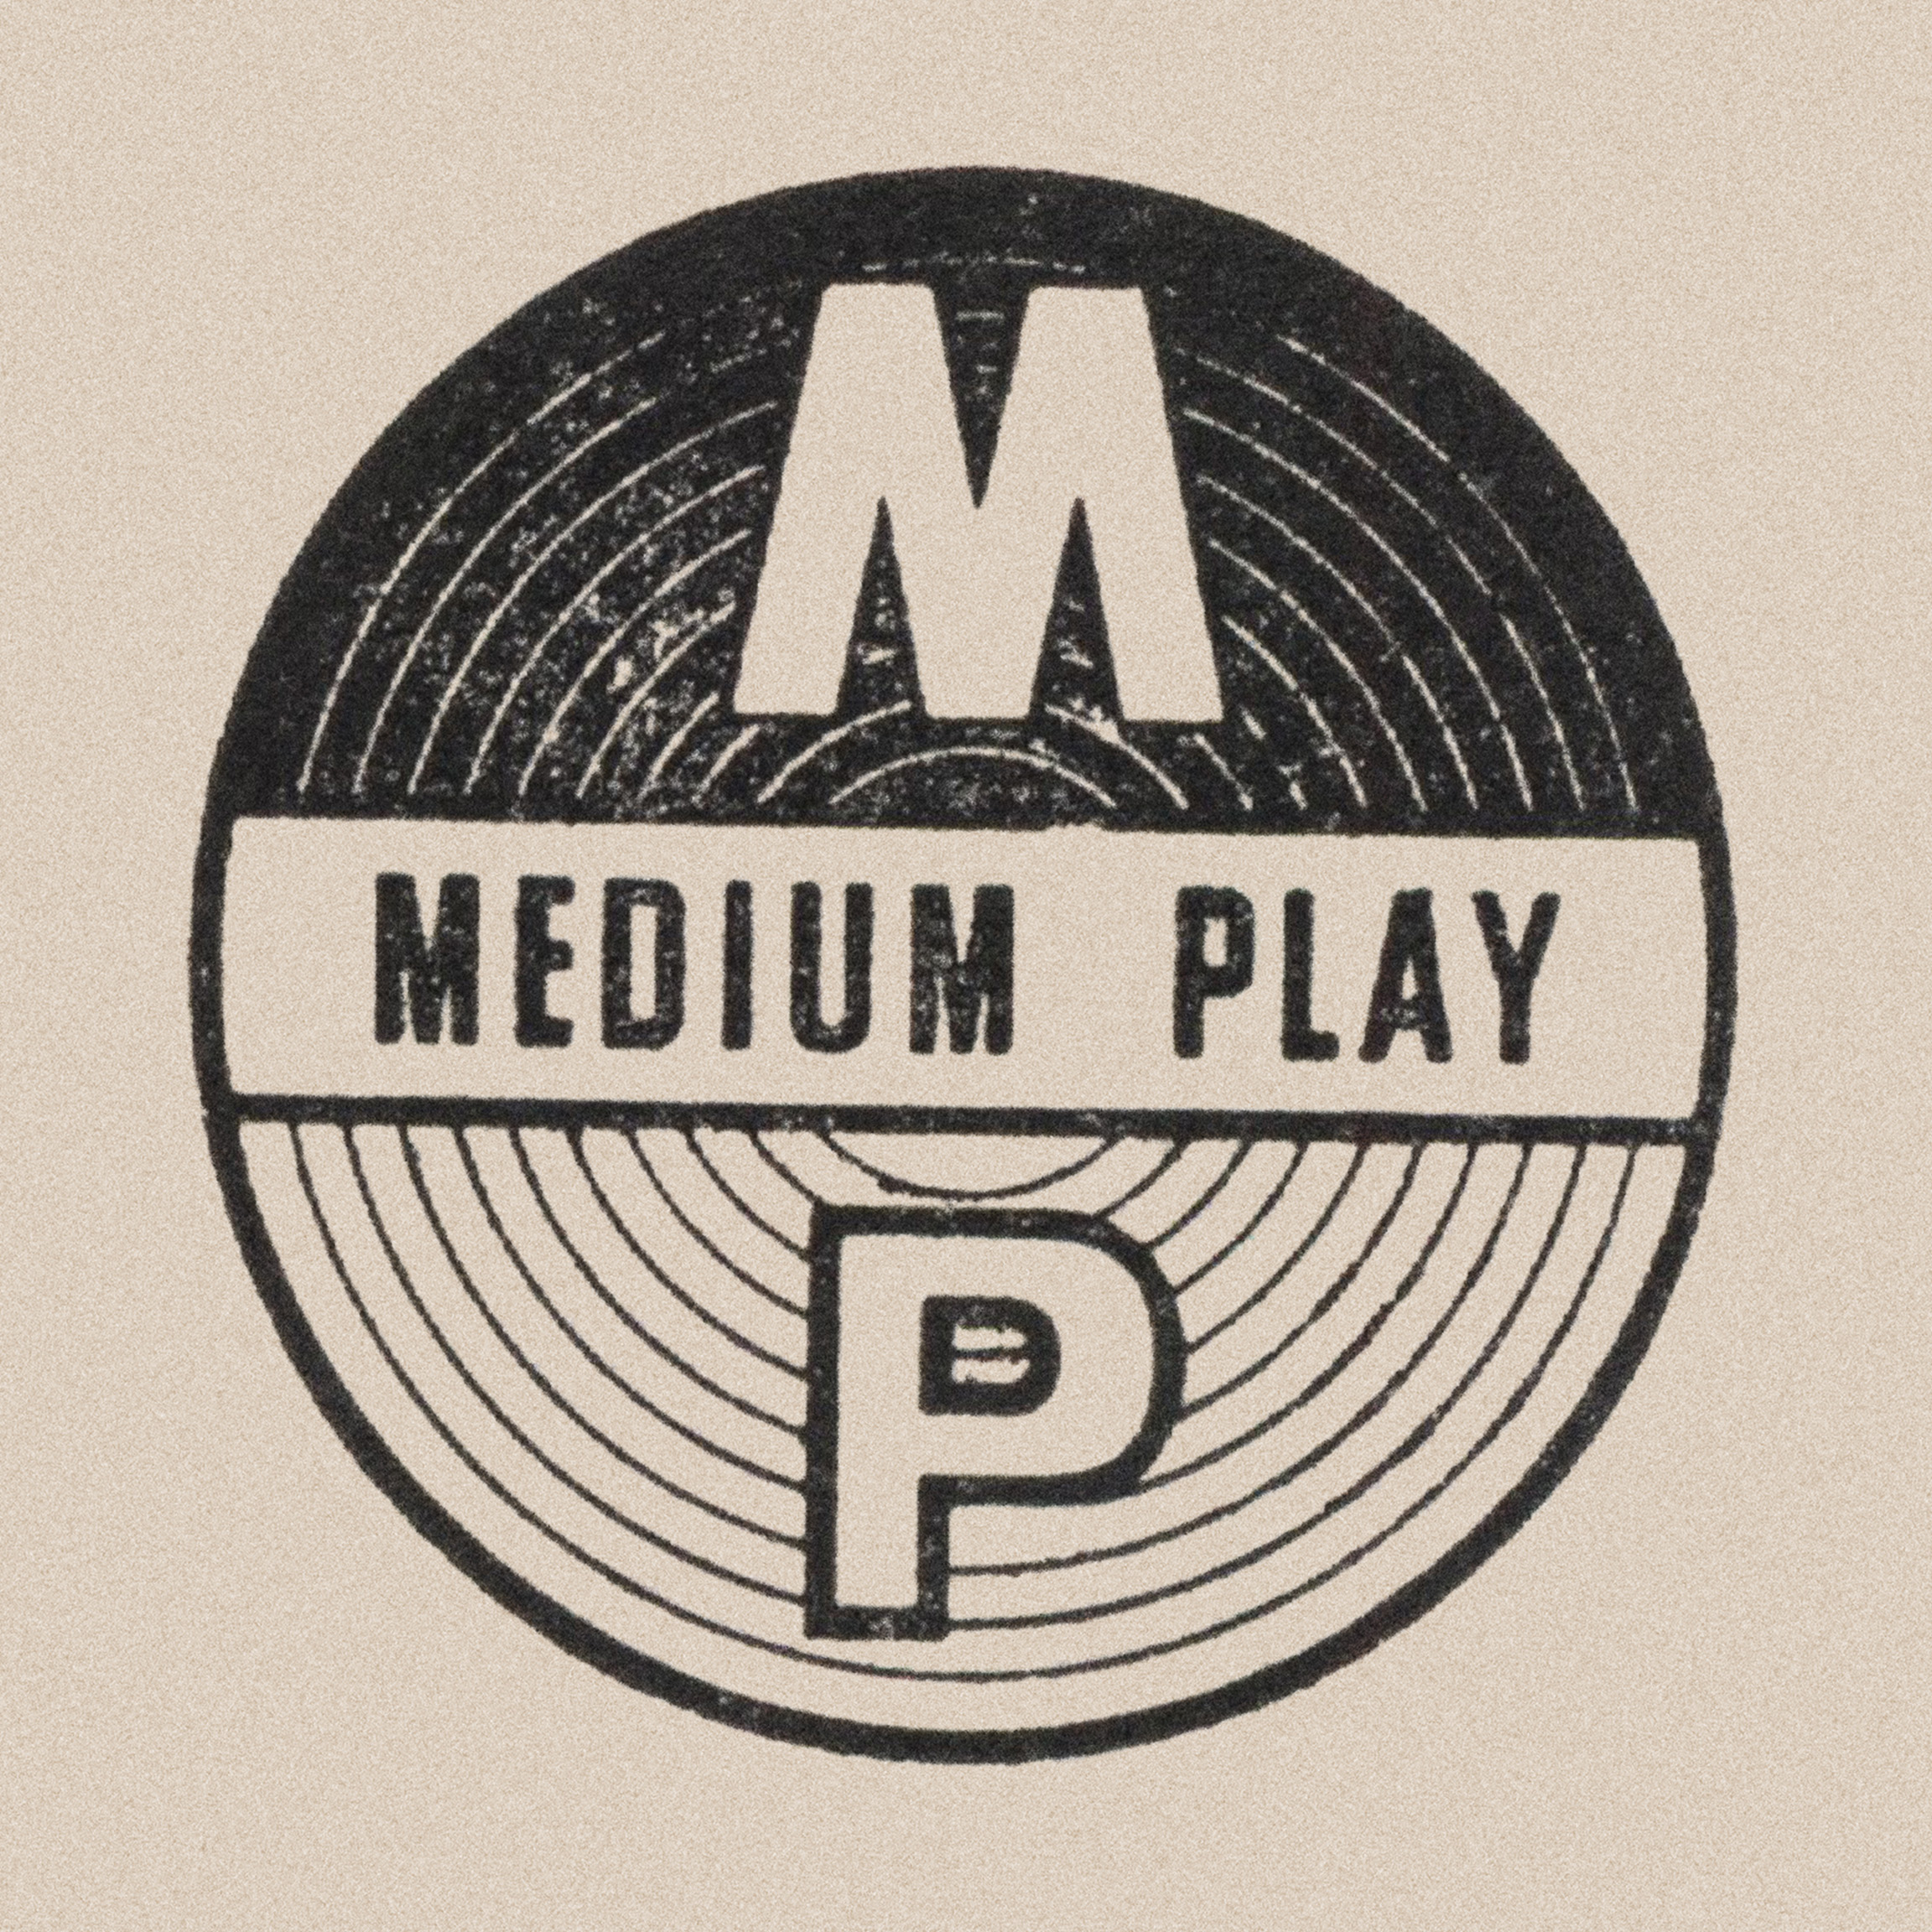 Medium Play